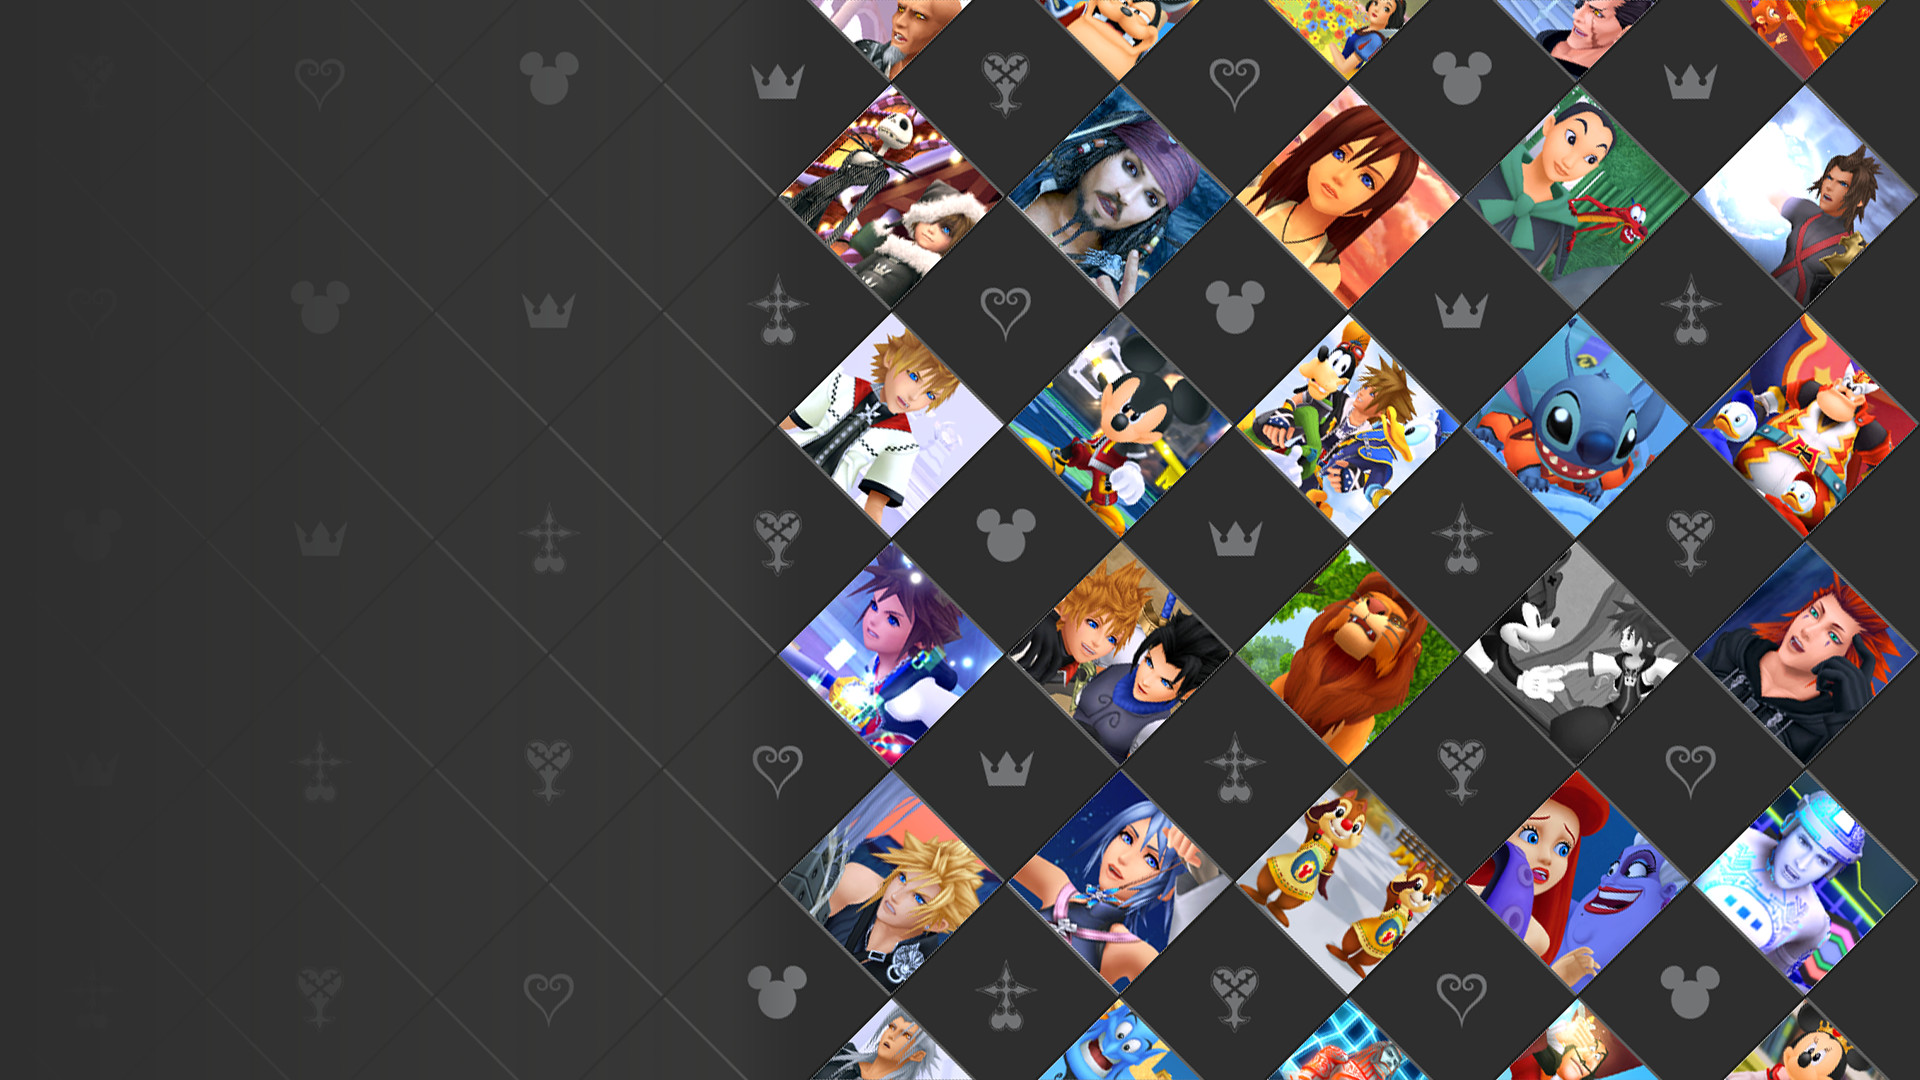 Explore Kingdom Hearts Wallpaper and more!